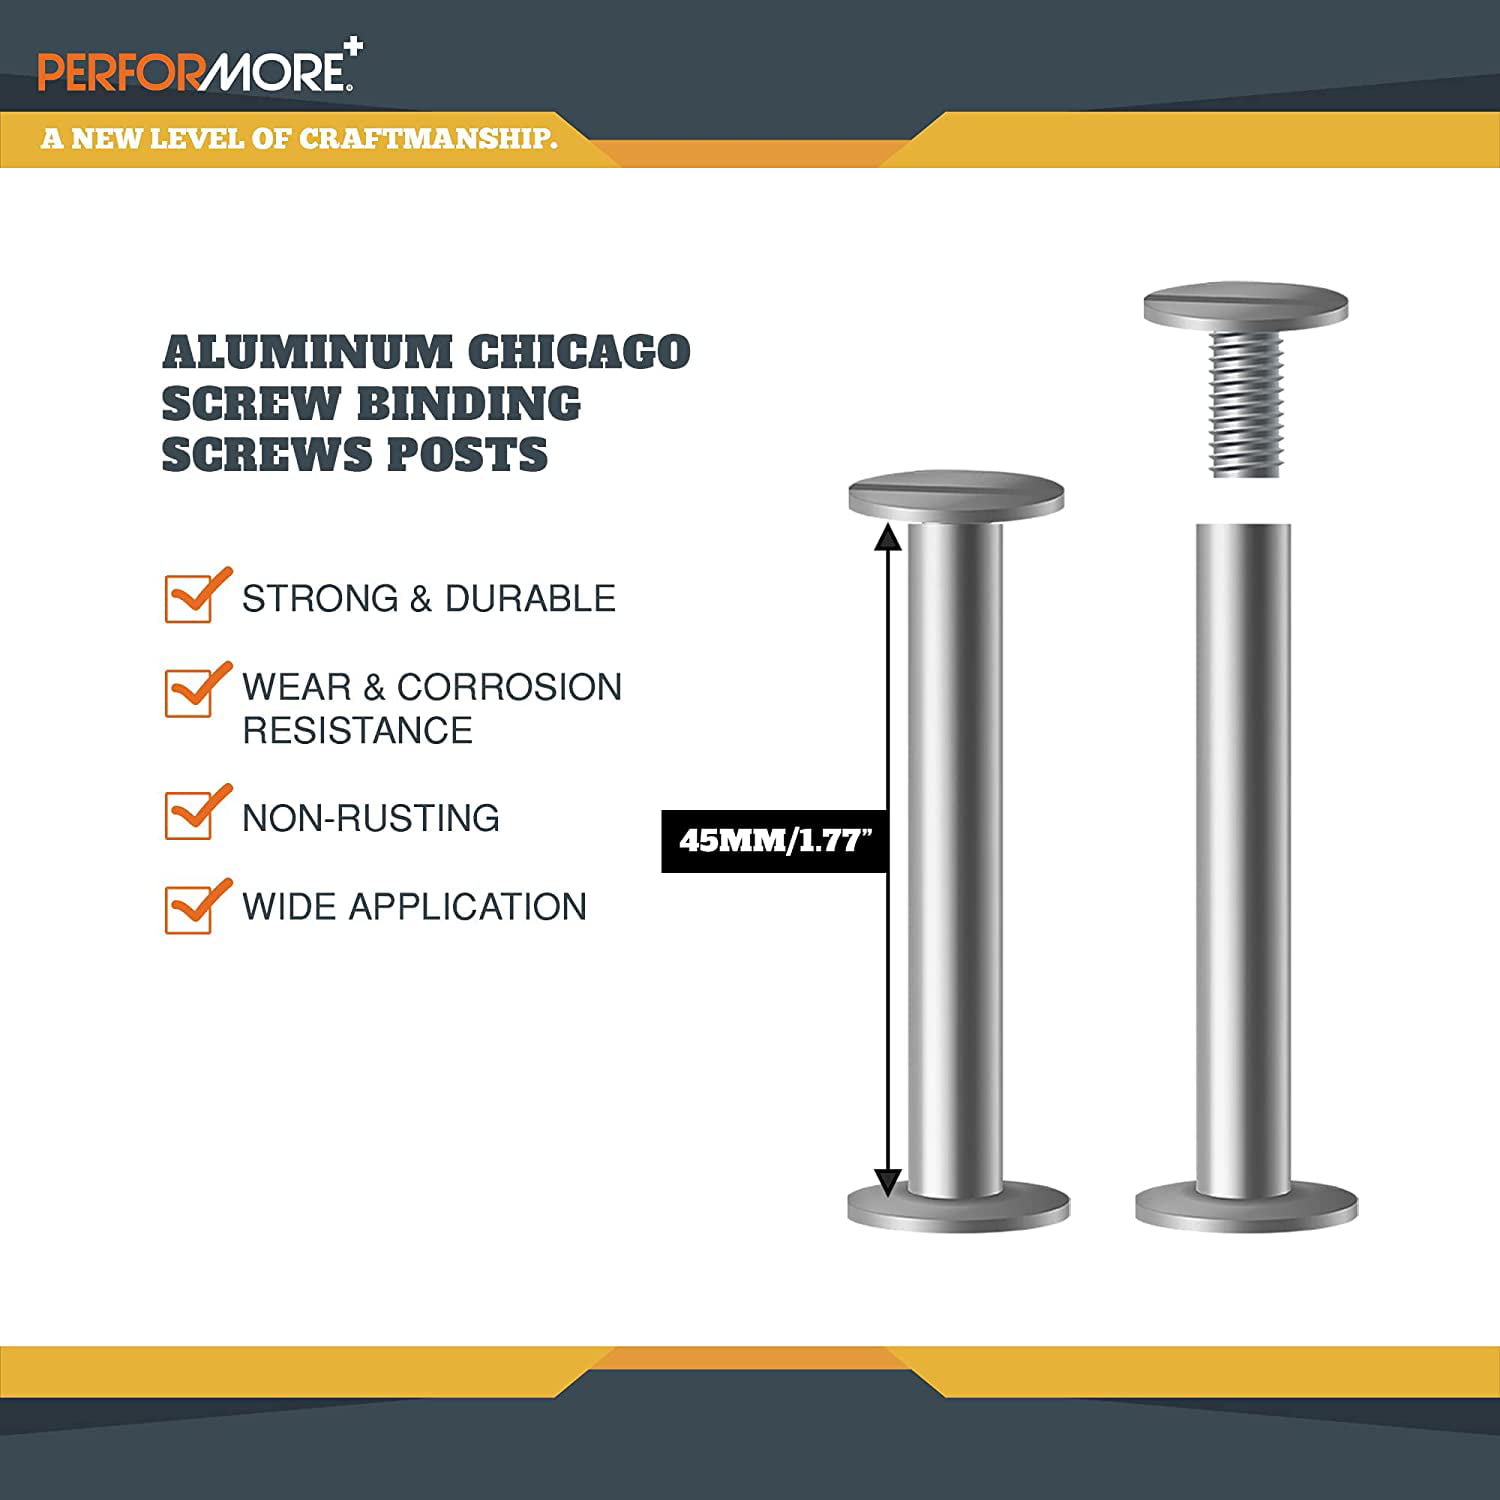 20 Pack of Silver Aluminum Screw Posts, 38mm Metal Chicago Screw Post  Binding Screws 